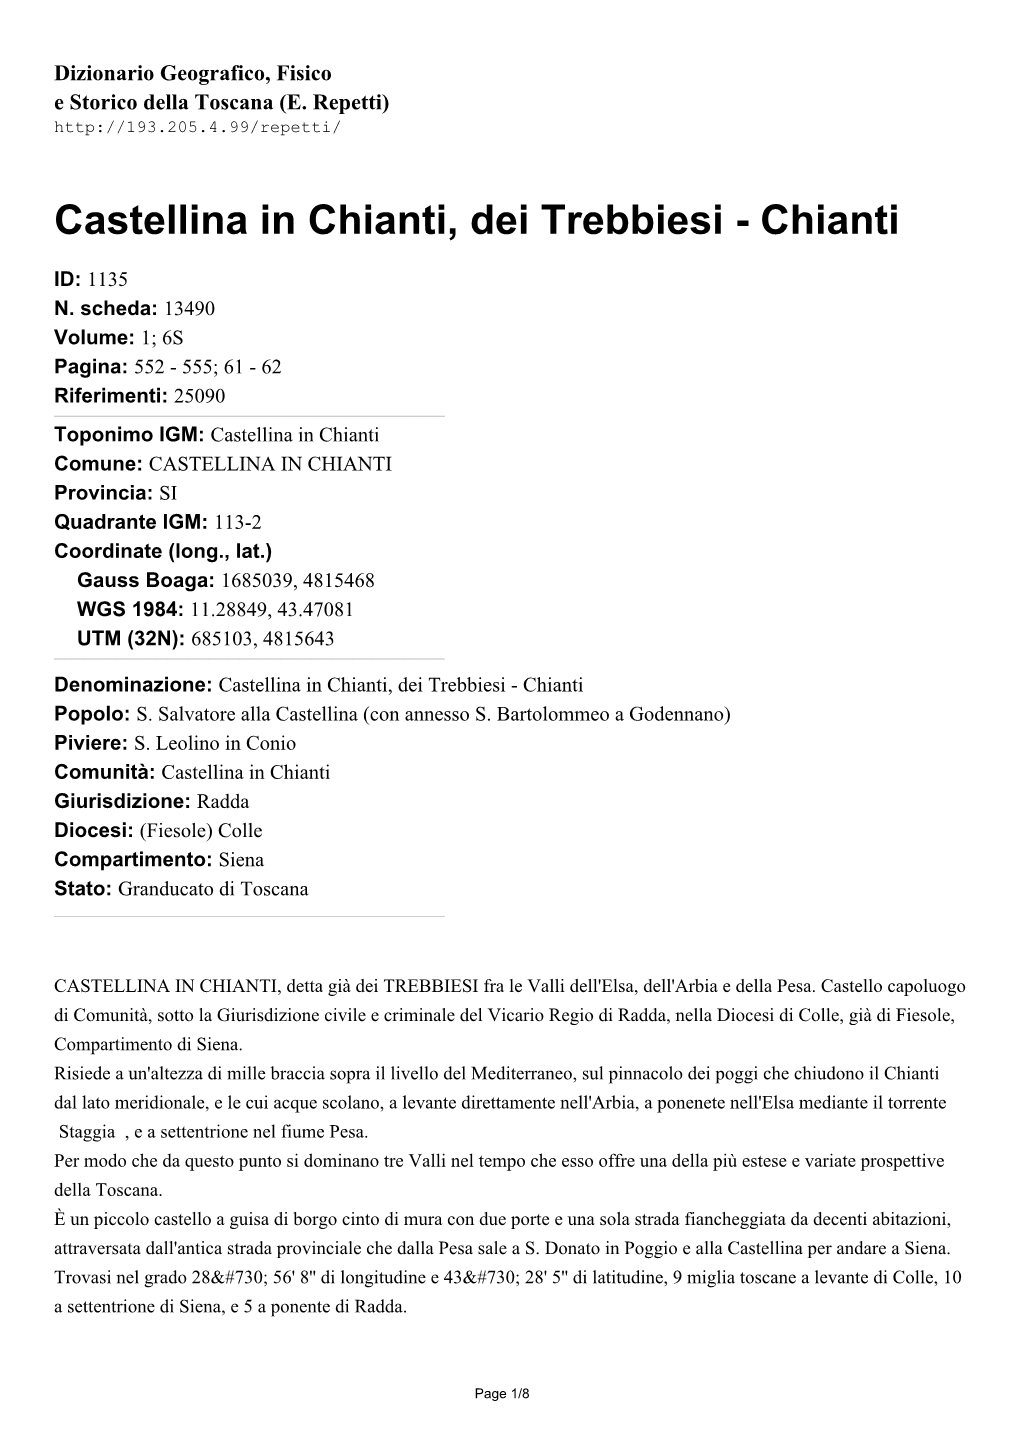 Castellina in Chianti, Dei Trebbiesi - Chianti